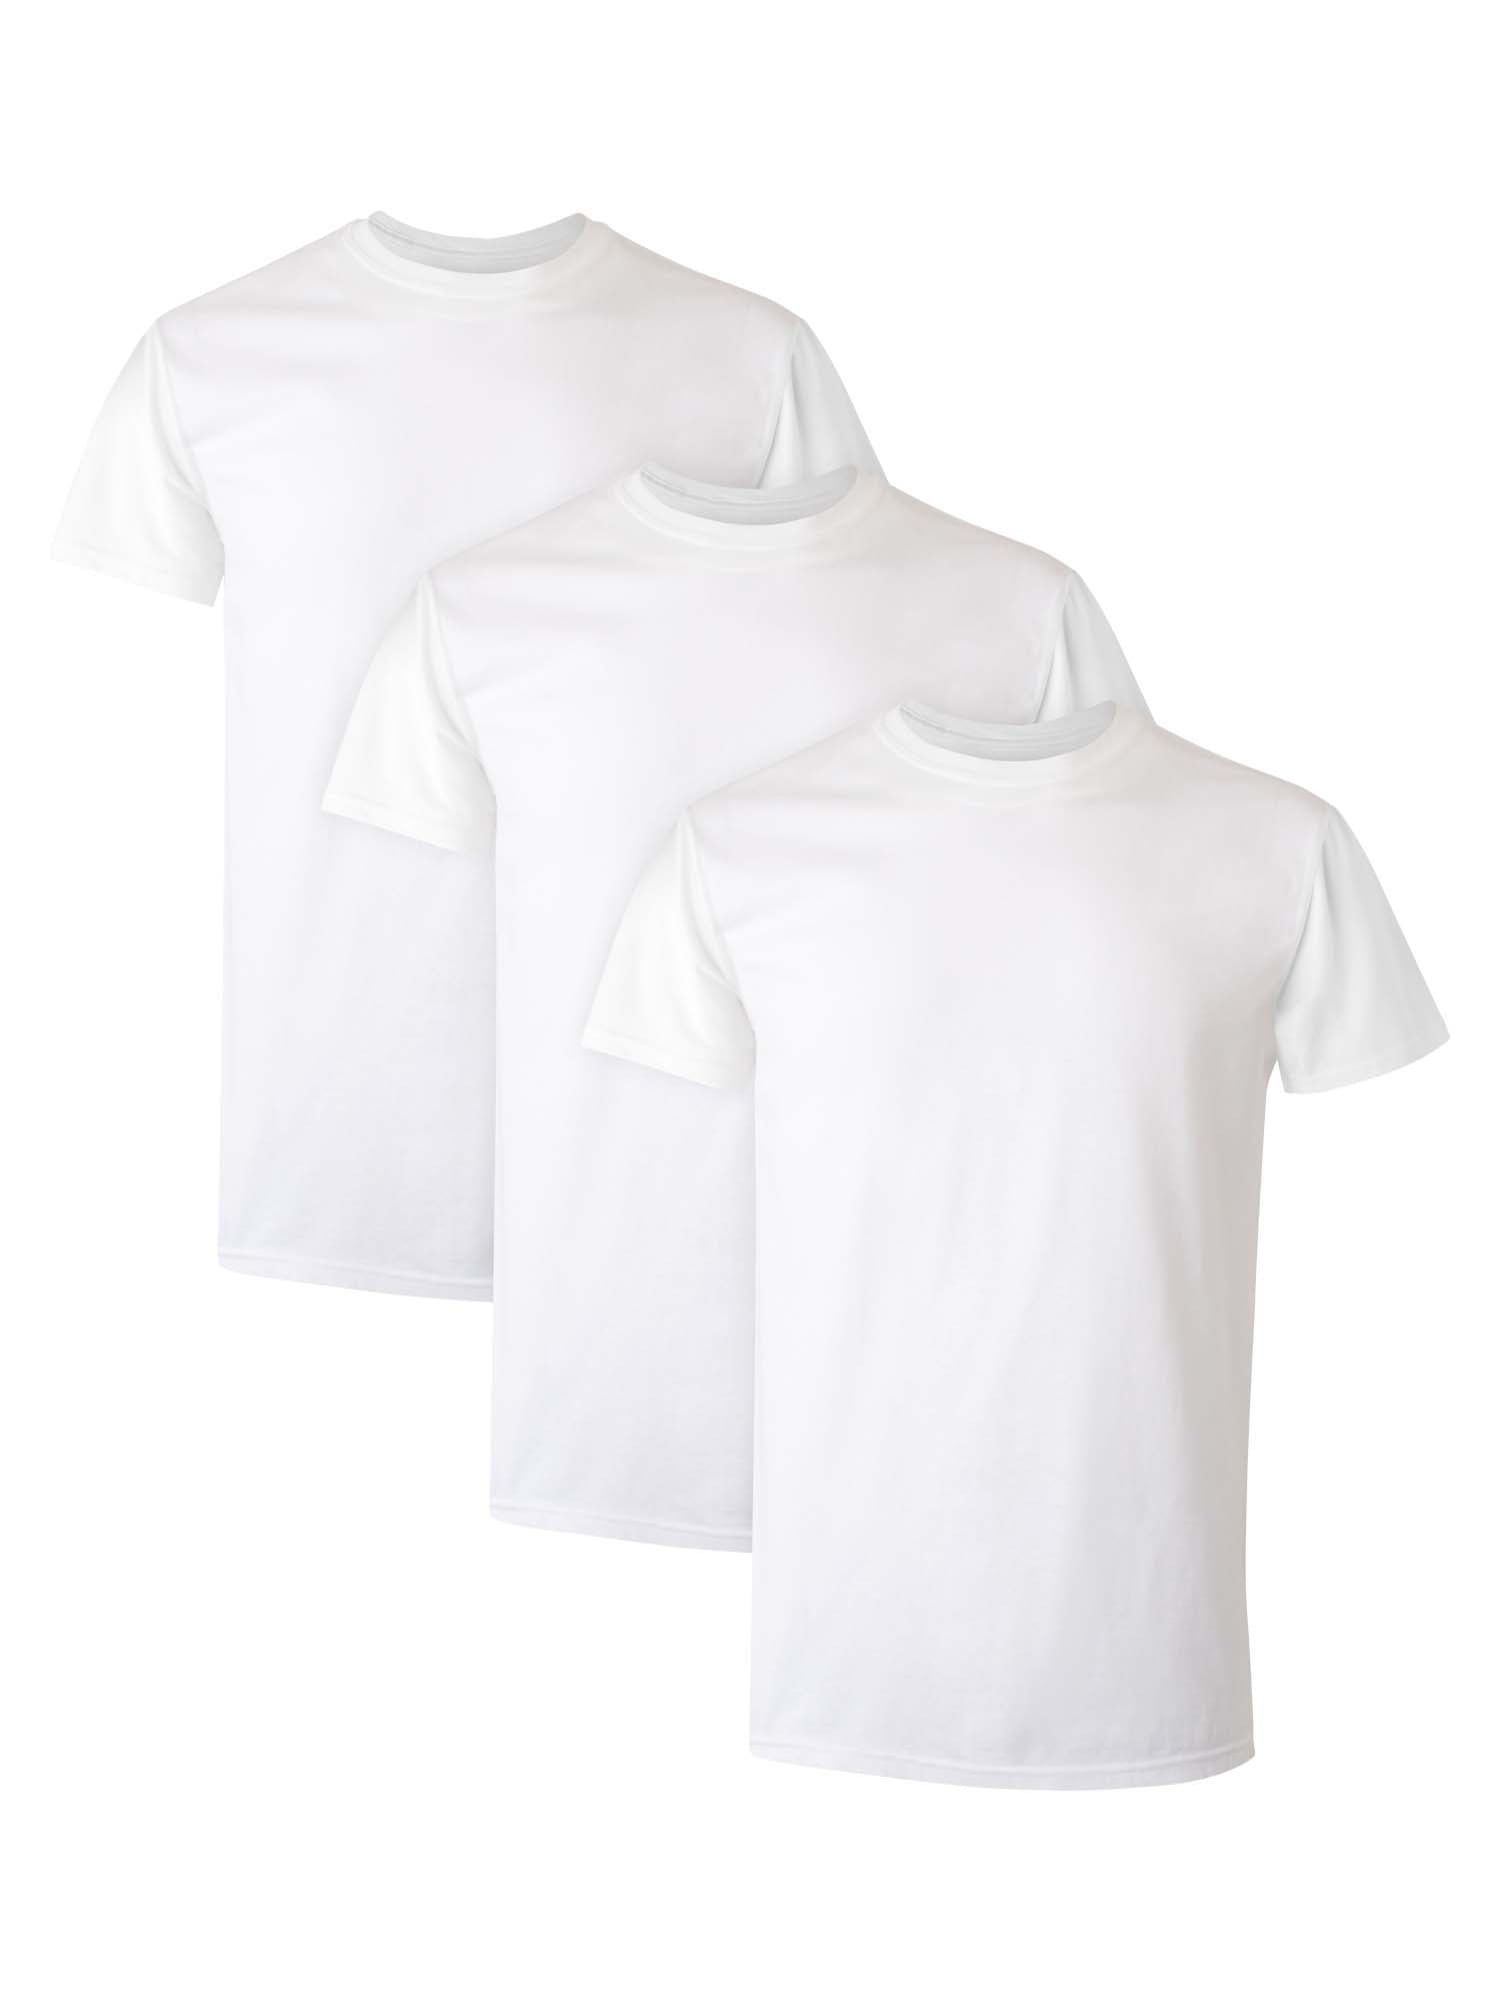 Hanes Men's Comfort Fit Ultra Soft Cotton White Crew T-Shirt Undershirts, 3 Pack